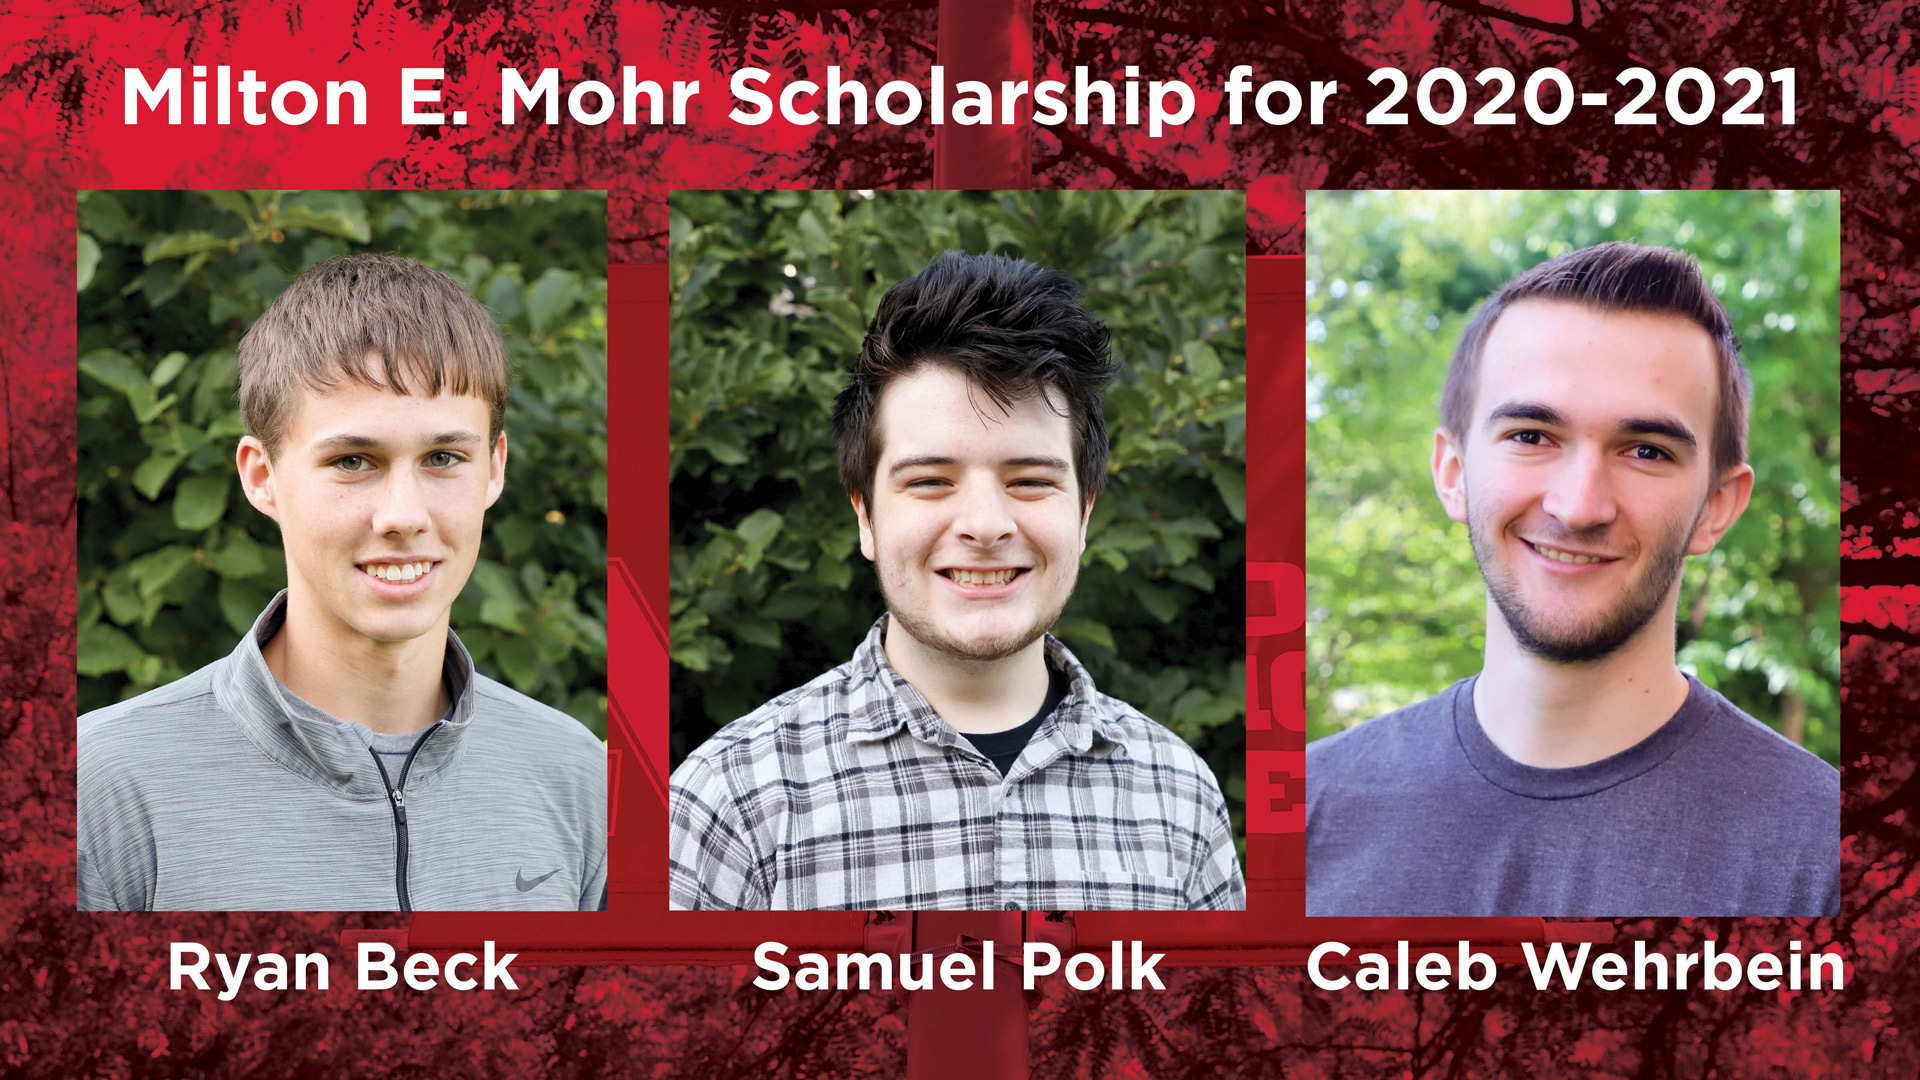 Ryan Beck, Samuel Polk and Caleb Wehrbein received Milton E. Mohr scholarships for 2020-2021.